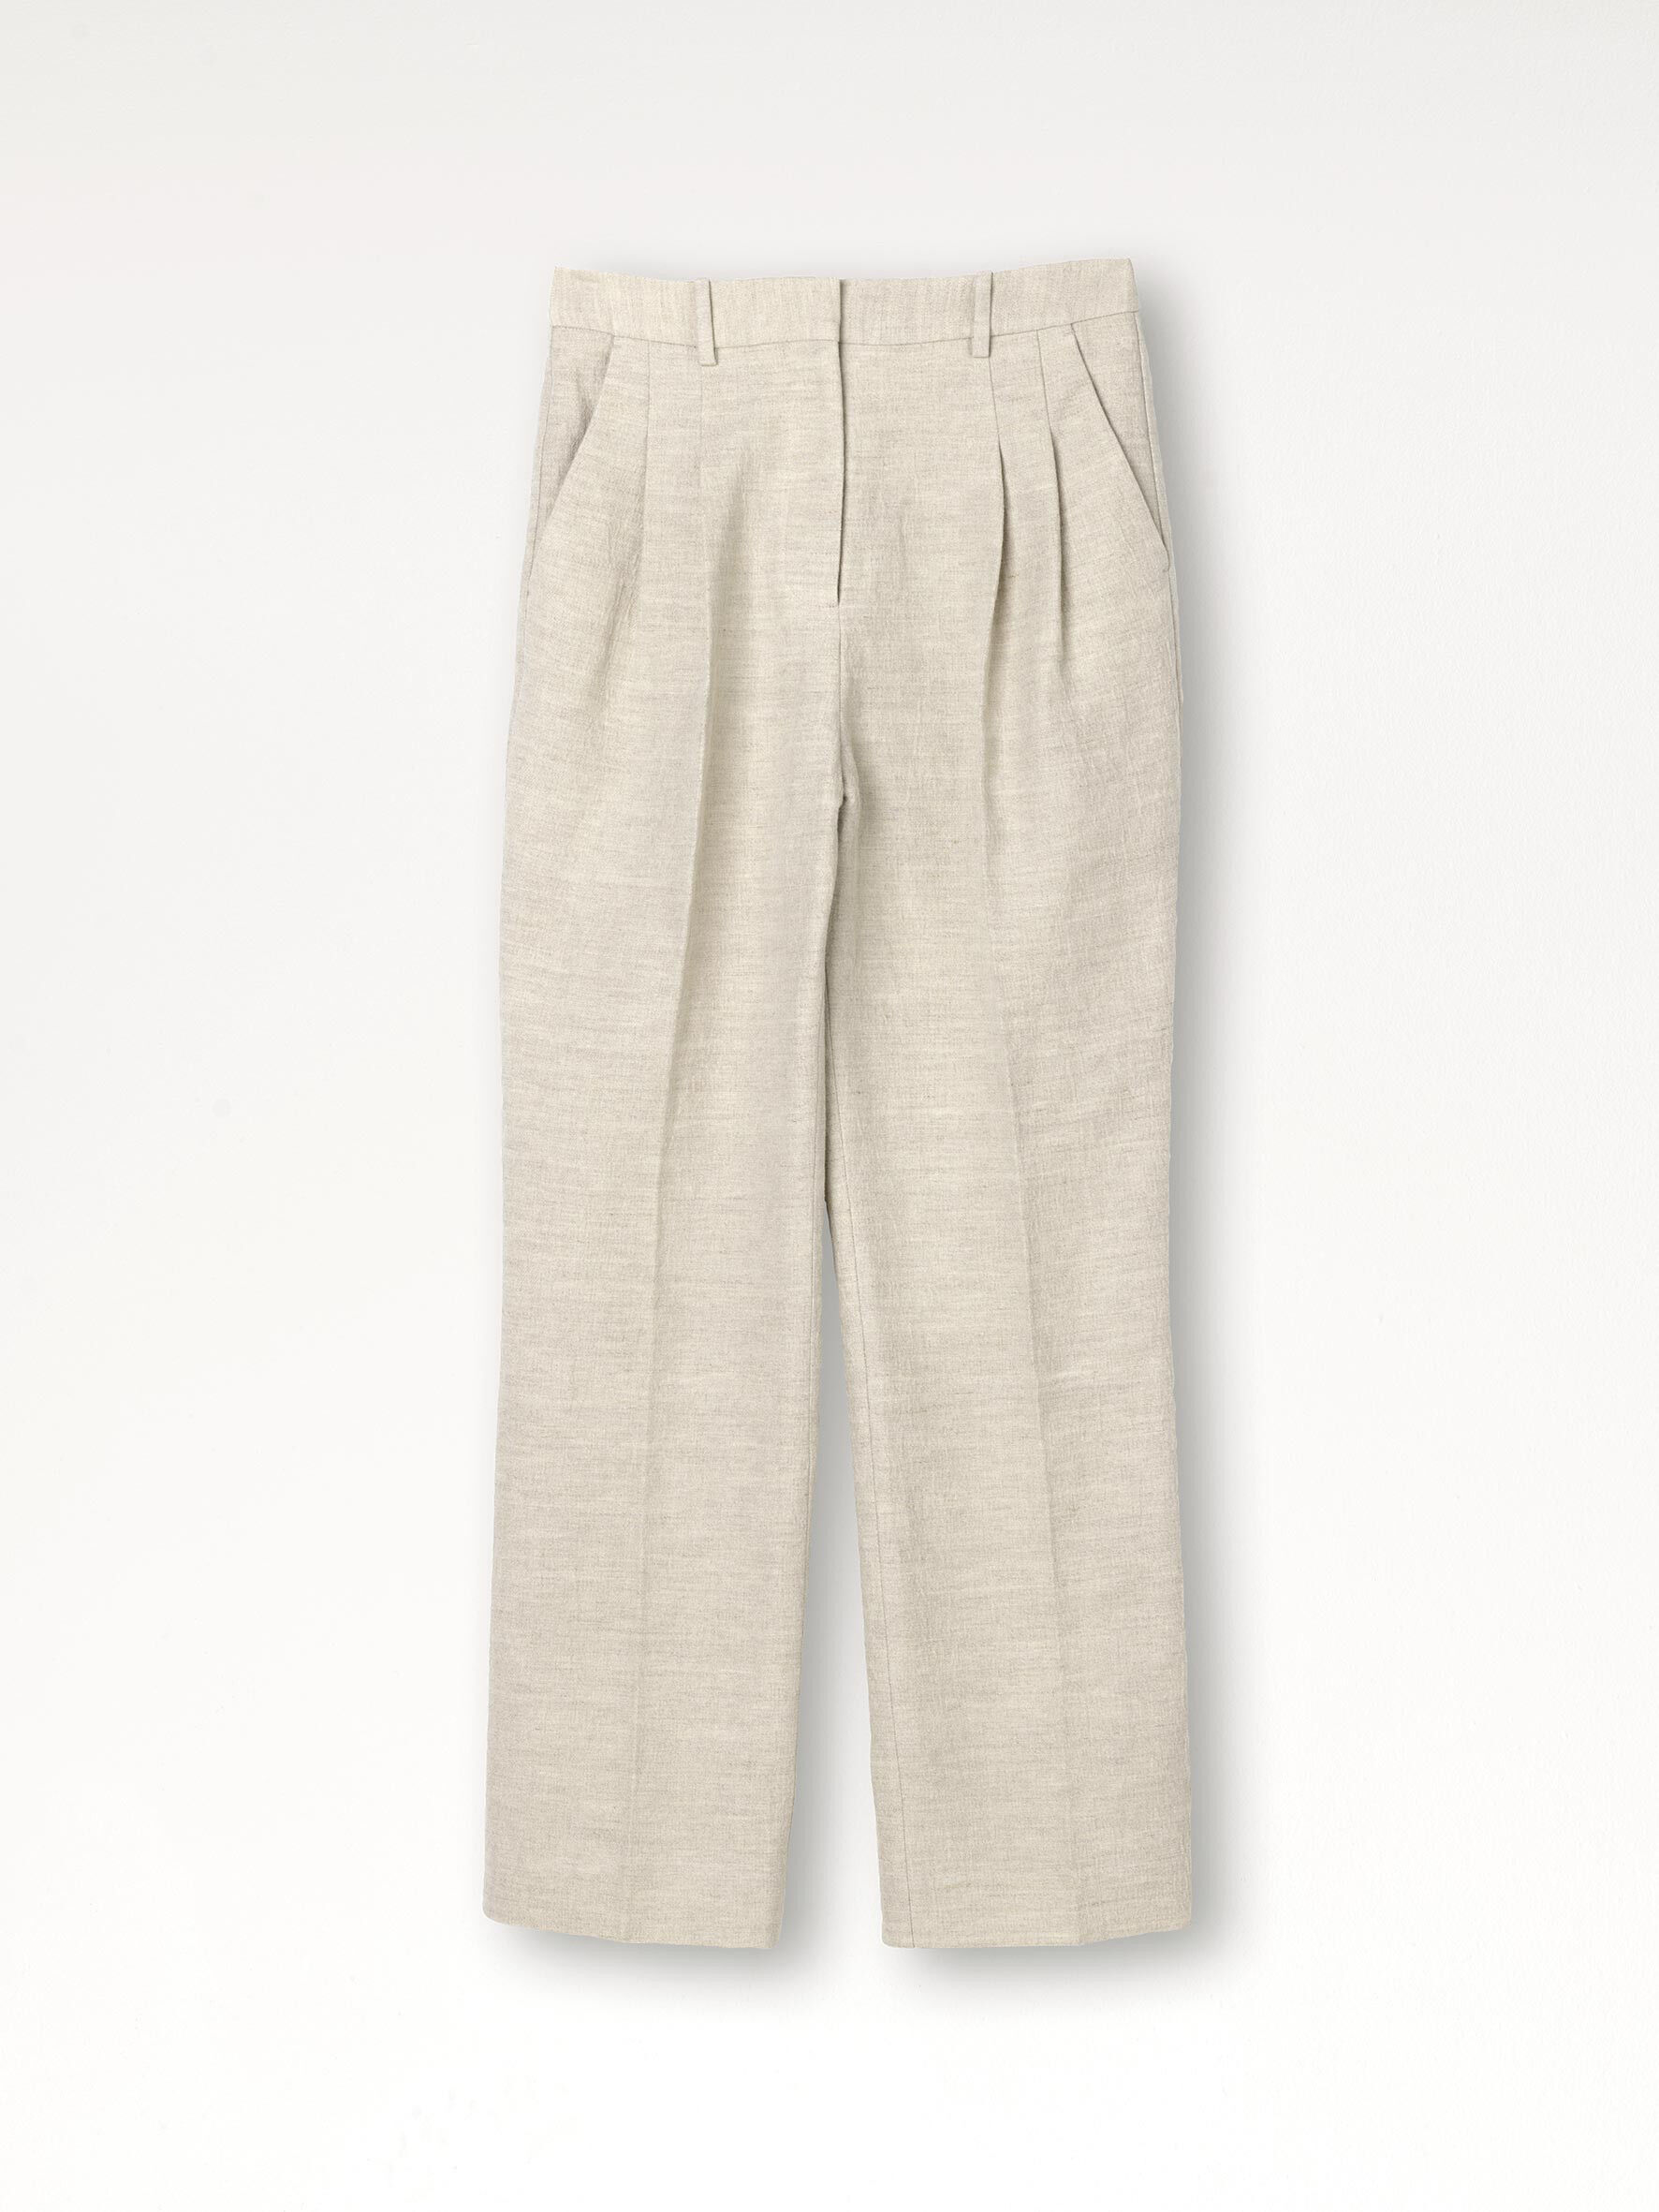 buy trousers online